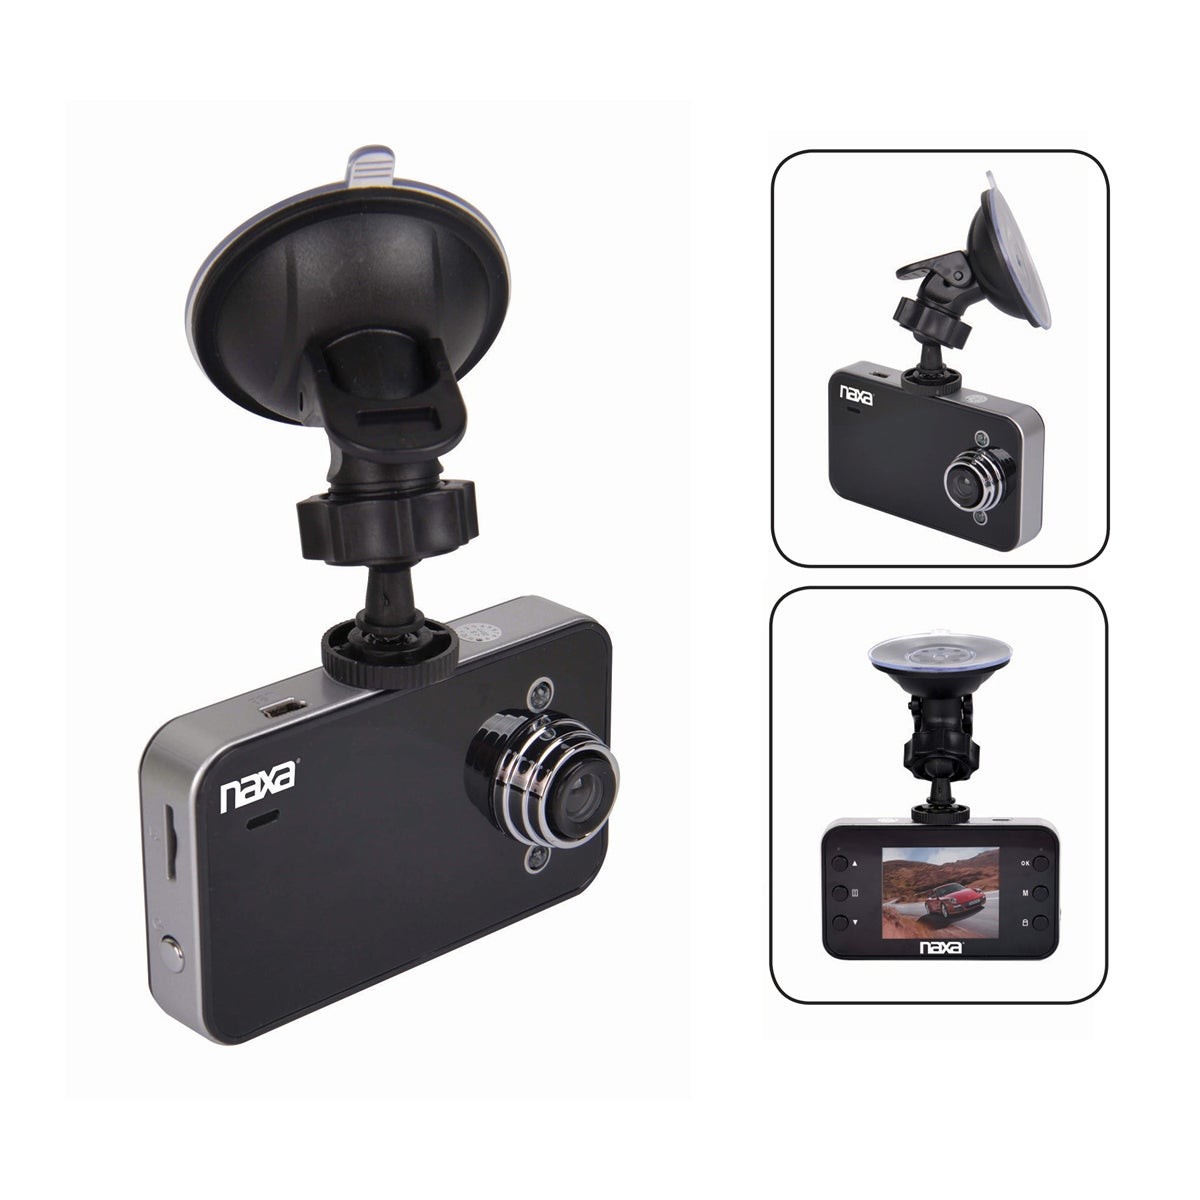 Portable HD Video Dash Cam